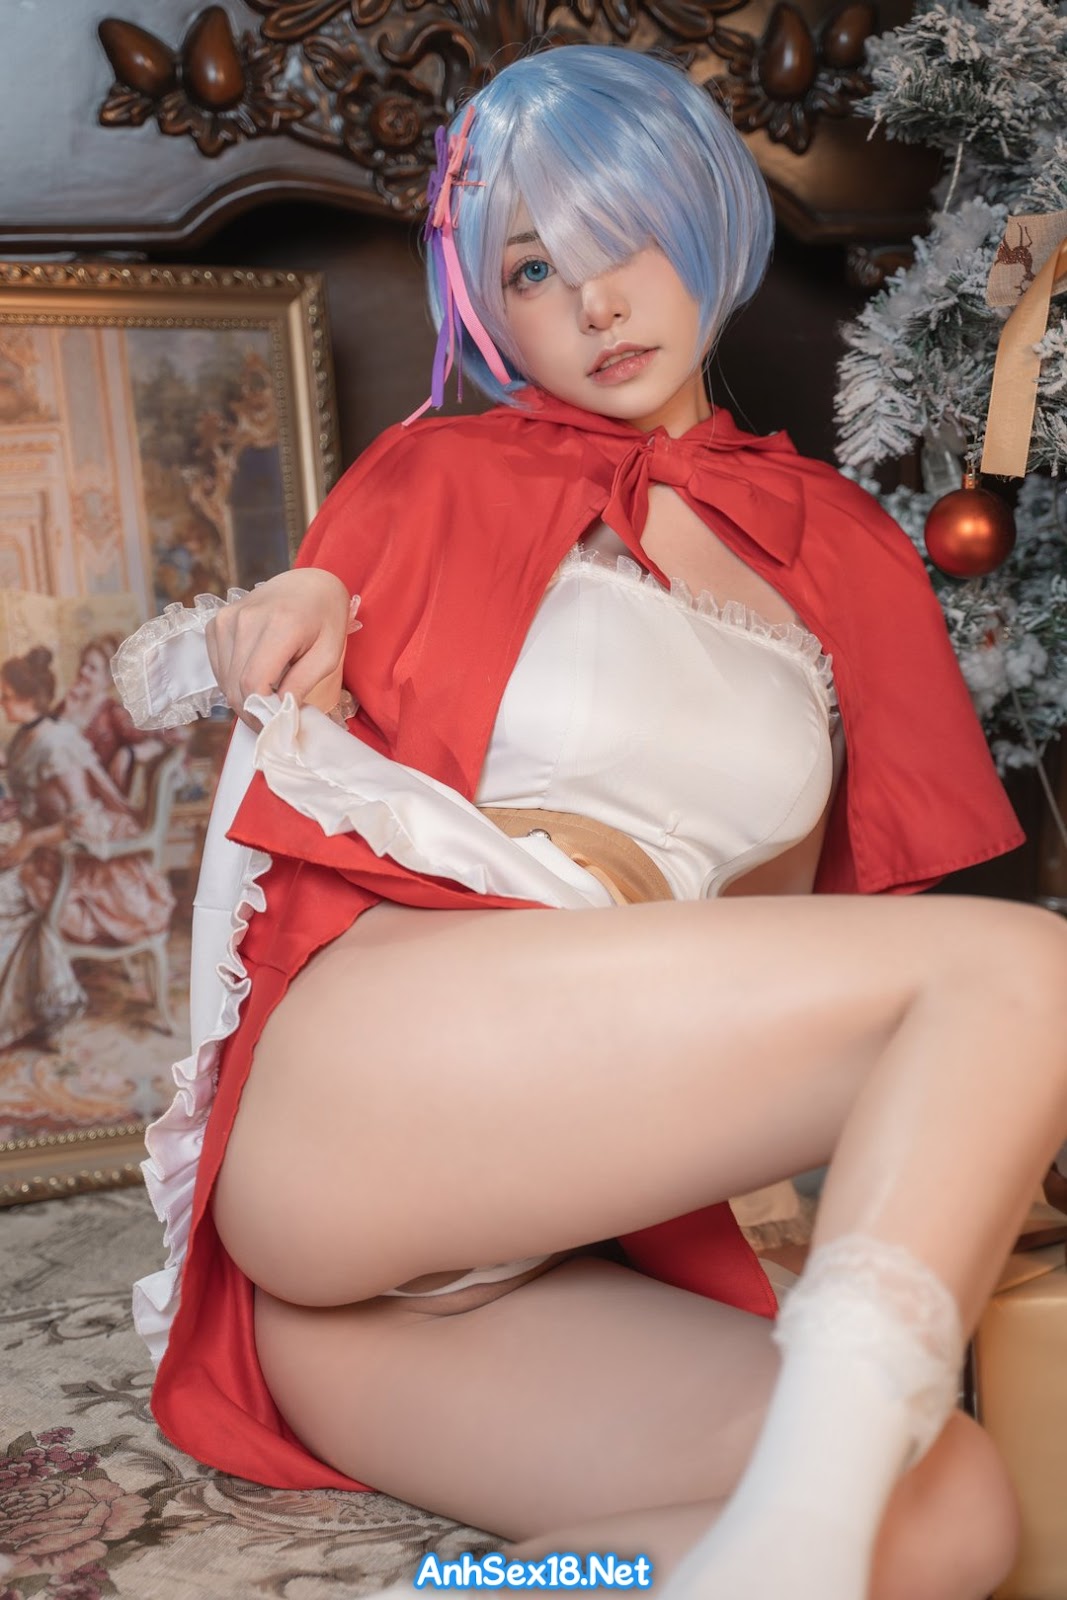 AnhSex18.Net | Girl xinh cosplay Giáng sinh